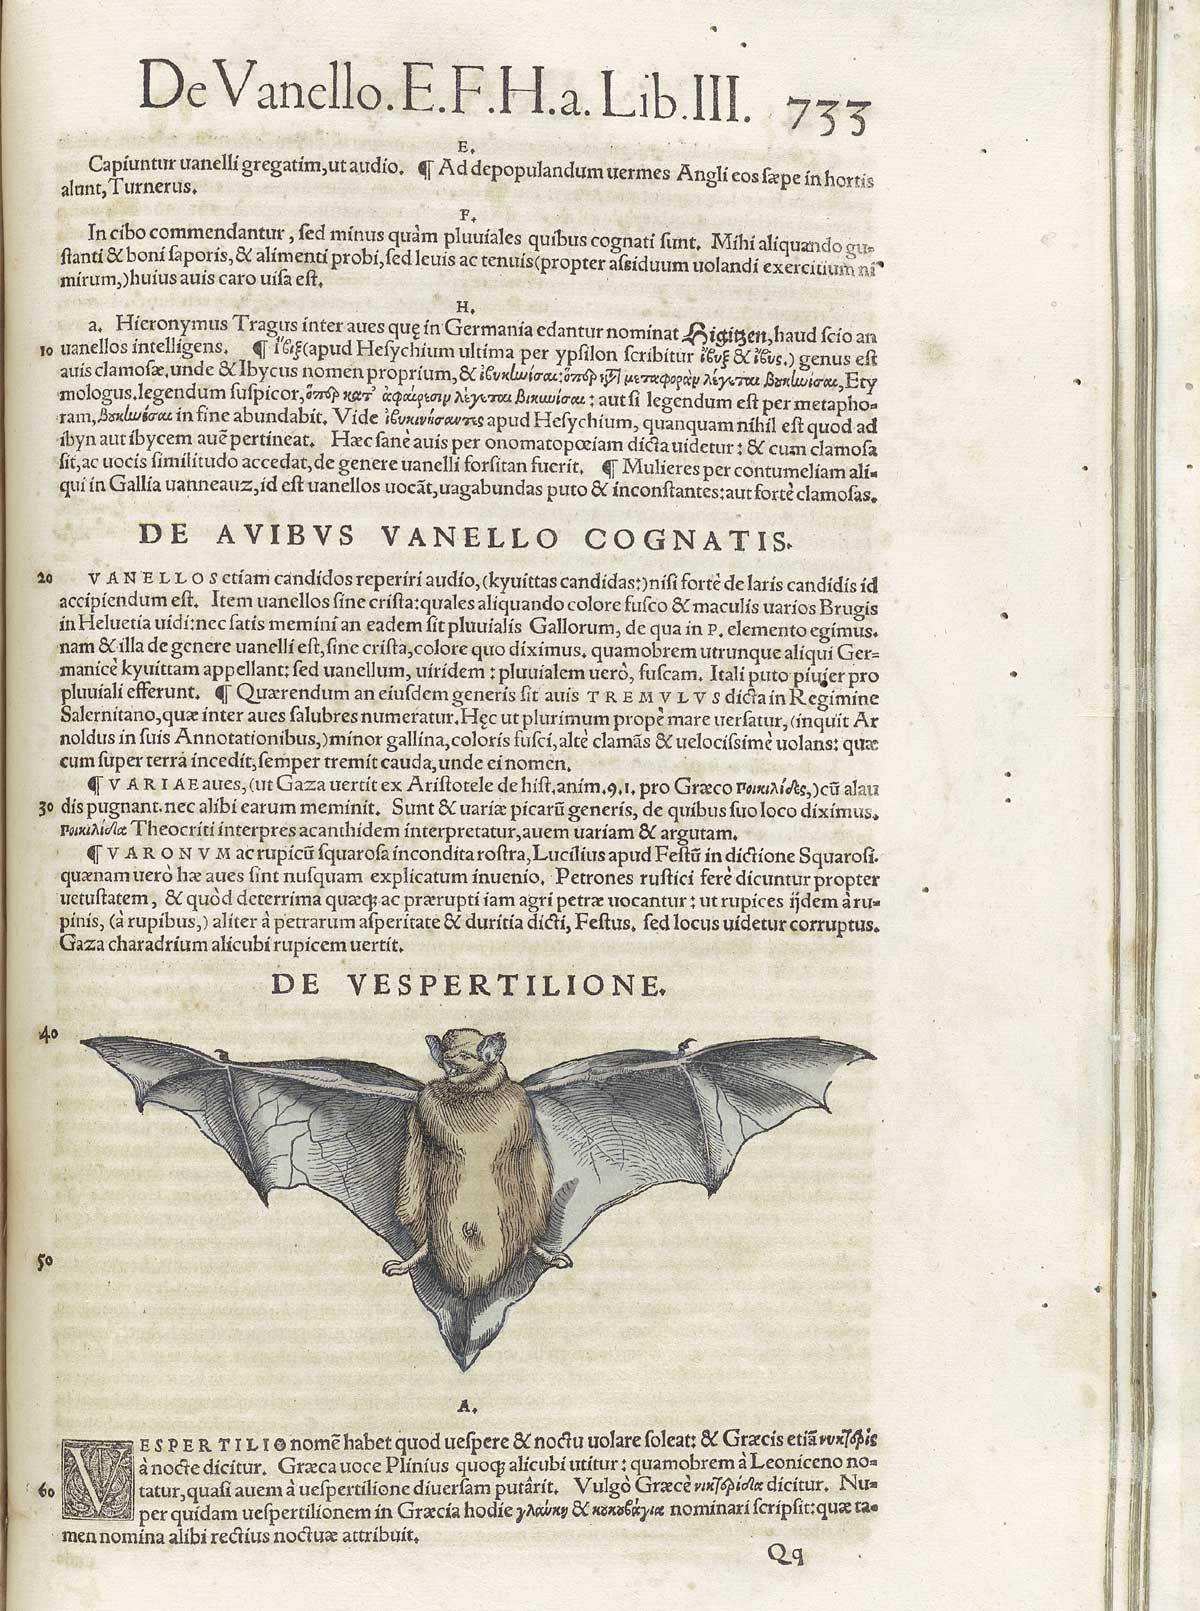 Page 733 from volume 3 of Conrad Gessner's Conradi Gesneri medici Tigurini Historiae animalium, featuring the colored woodcut of de vespertilione or a bat.